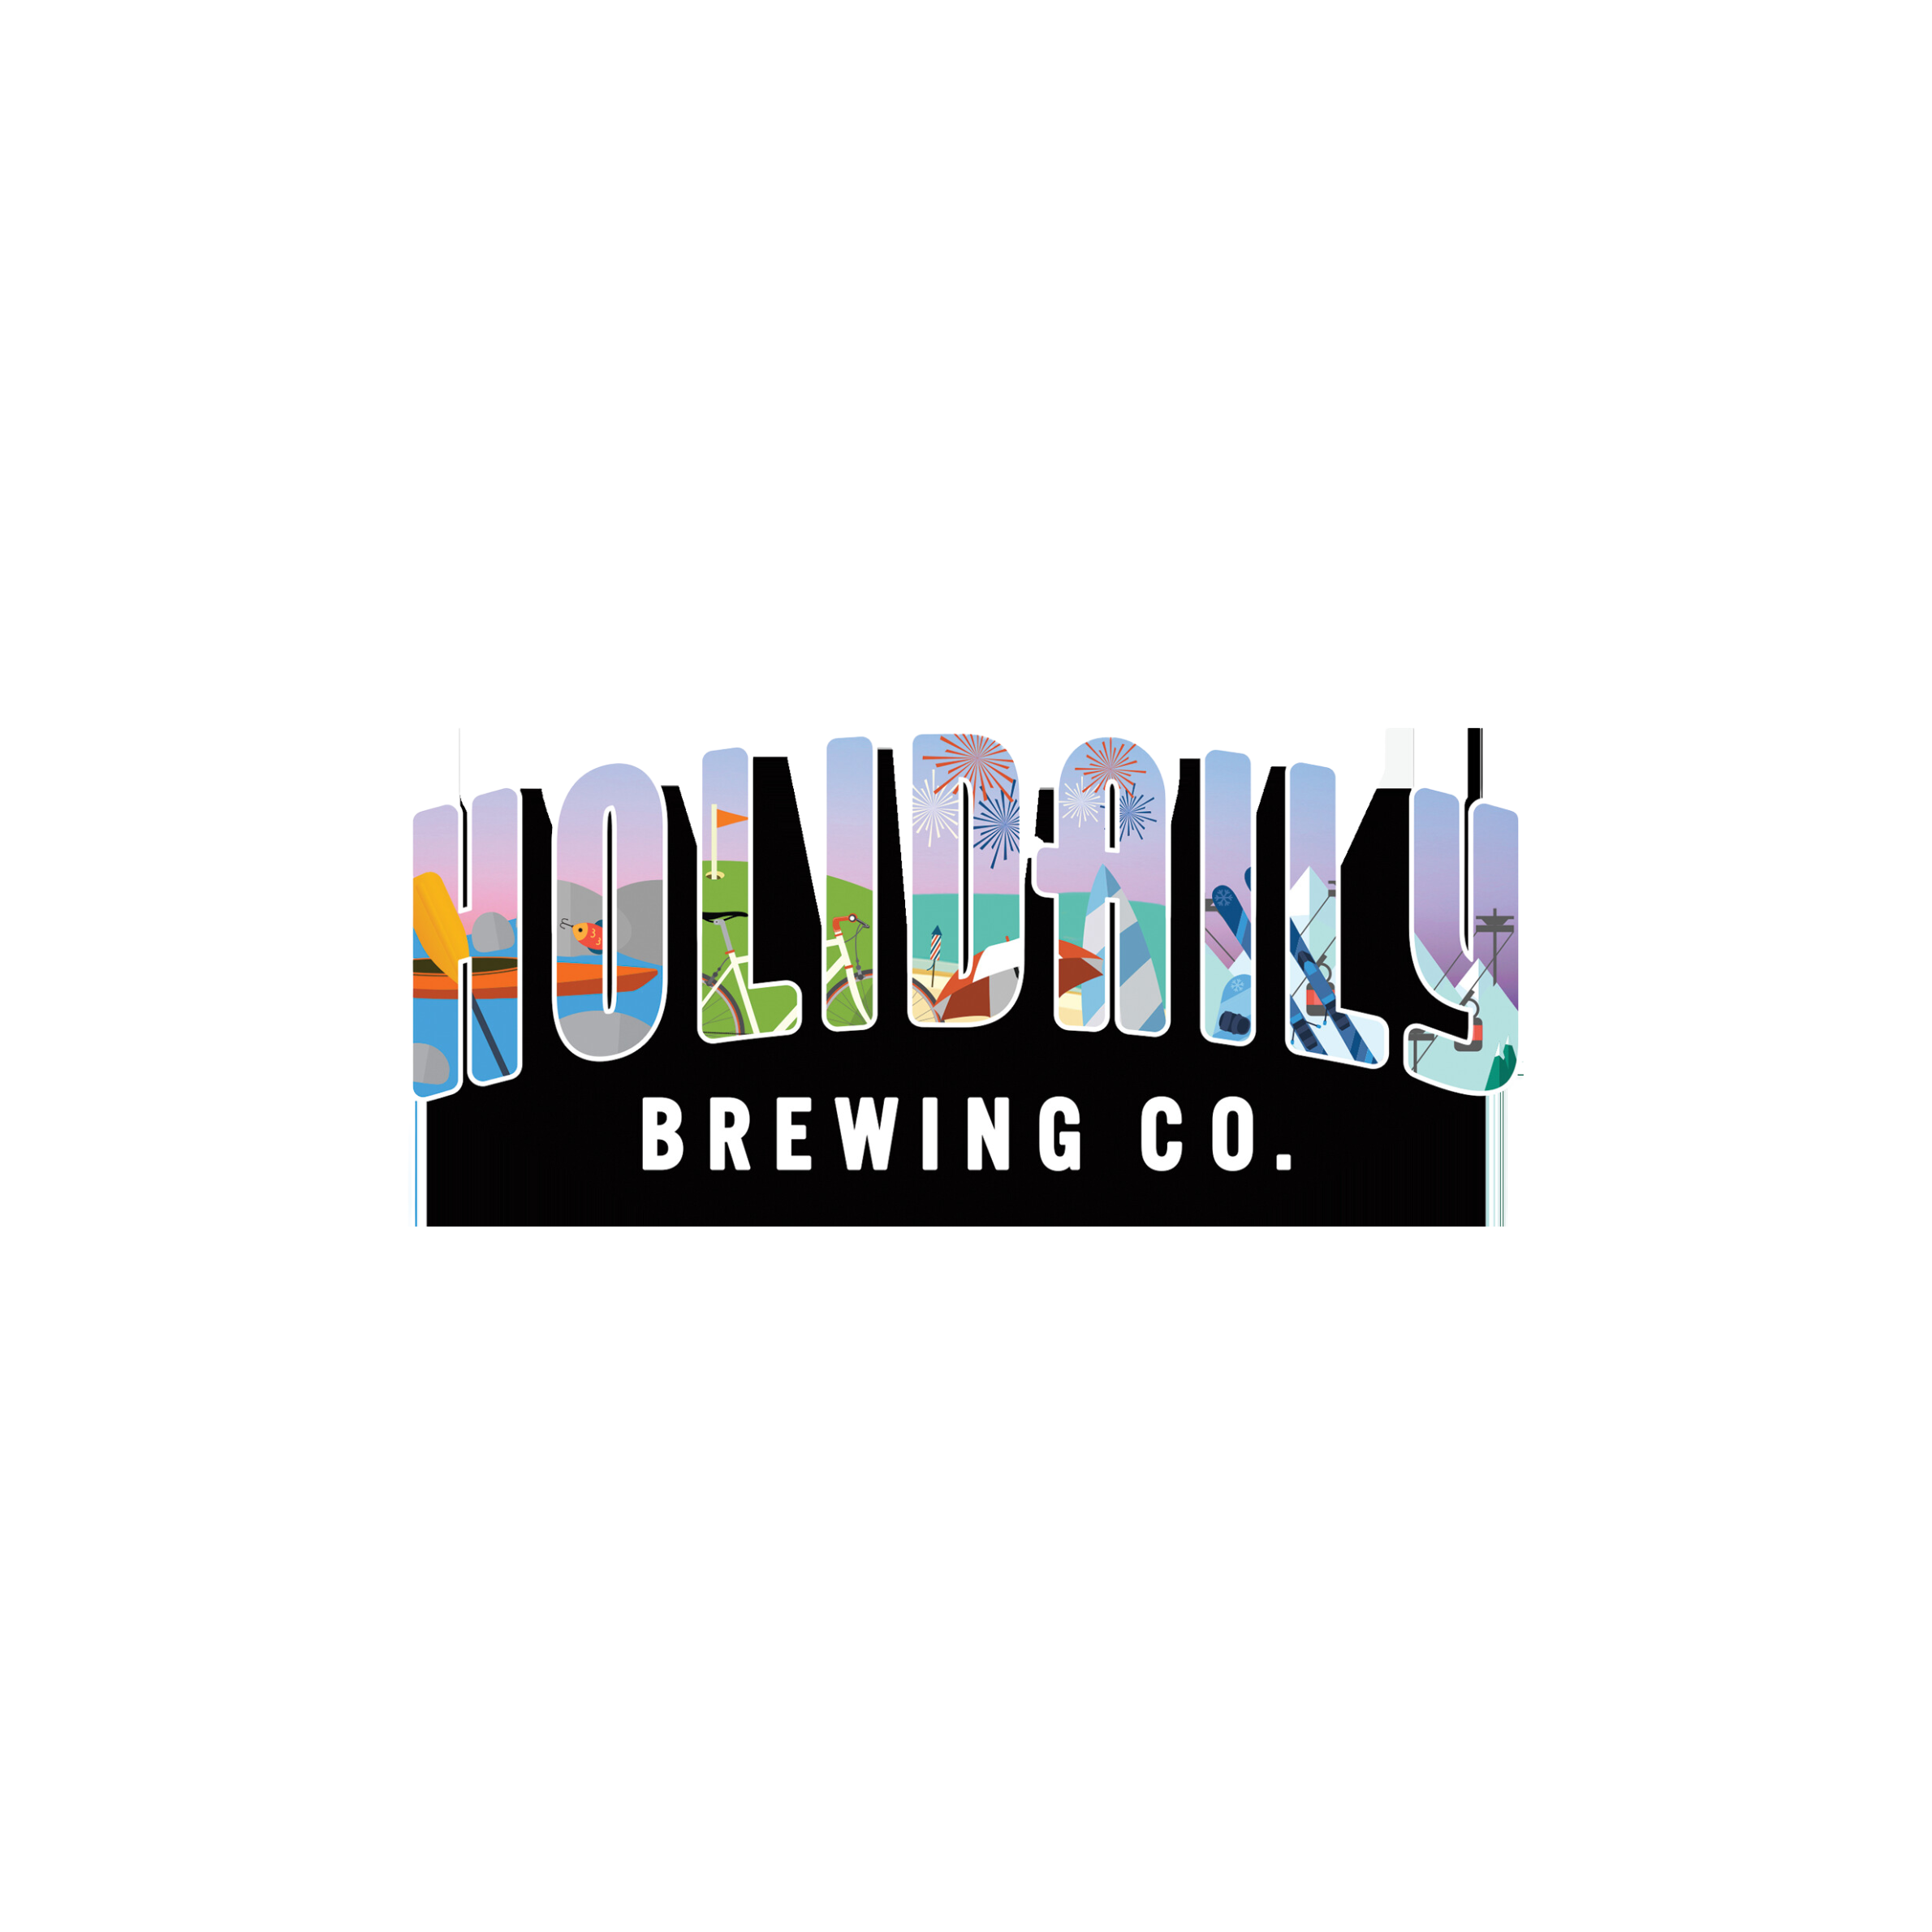 Holidaily Brewing Company